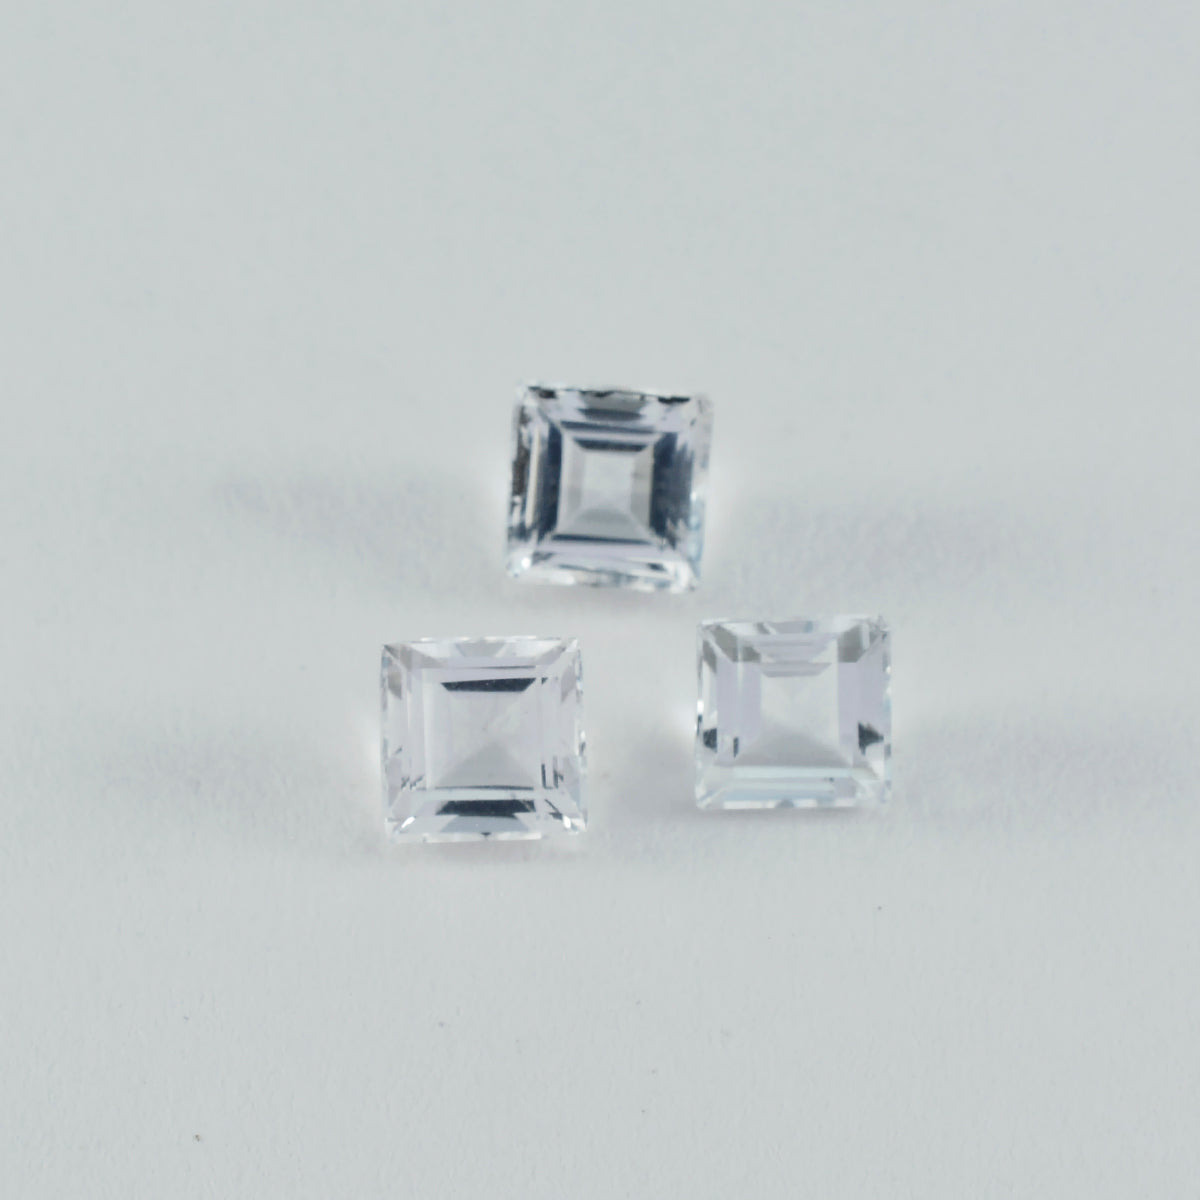 riyogems 1 st vit kristall kvarts facetterad 8x8 mm fyrkantig form snygg kvalitetspärla